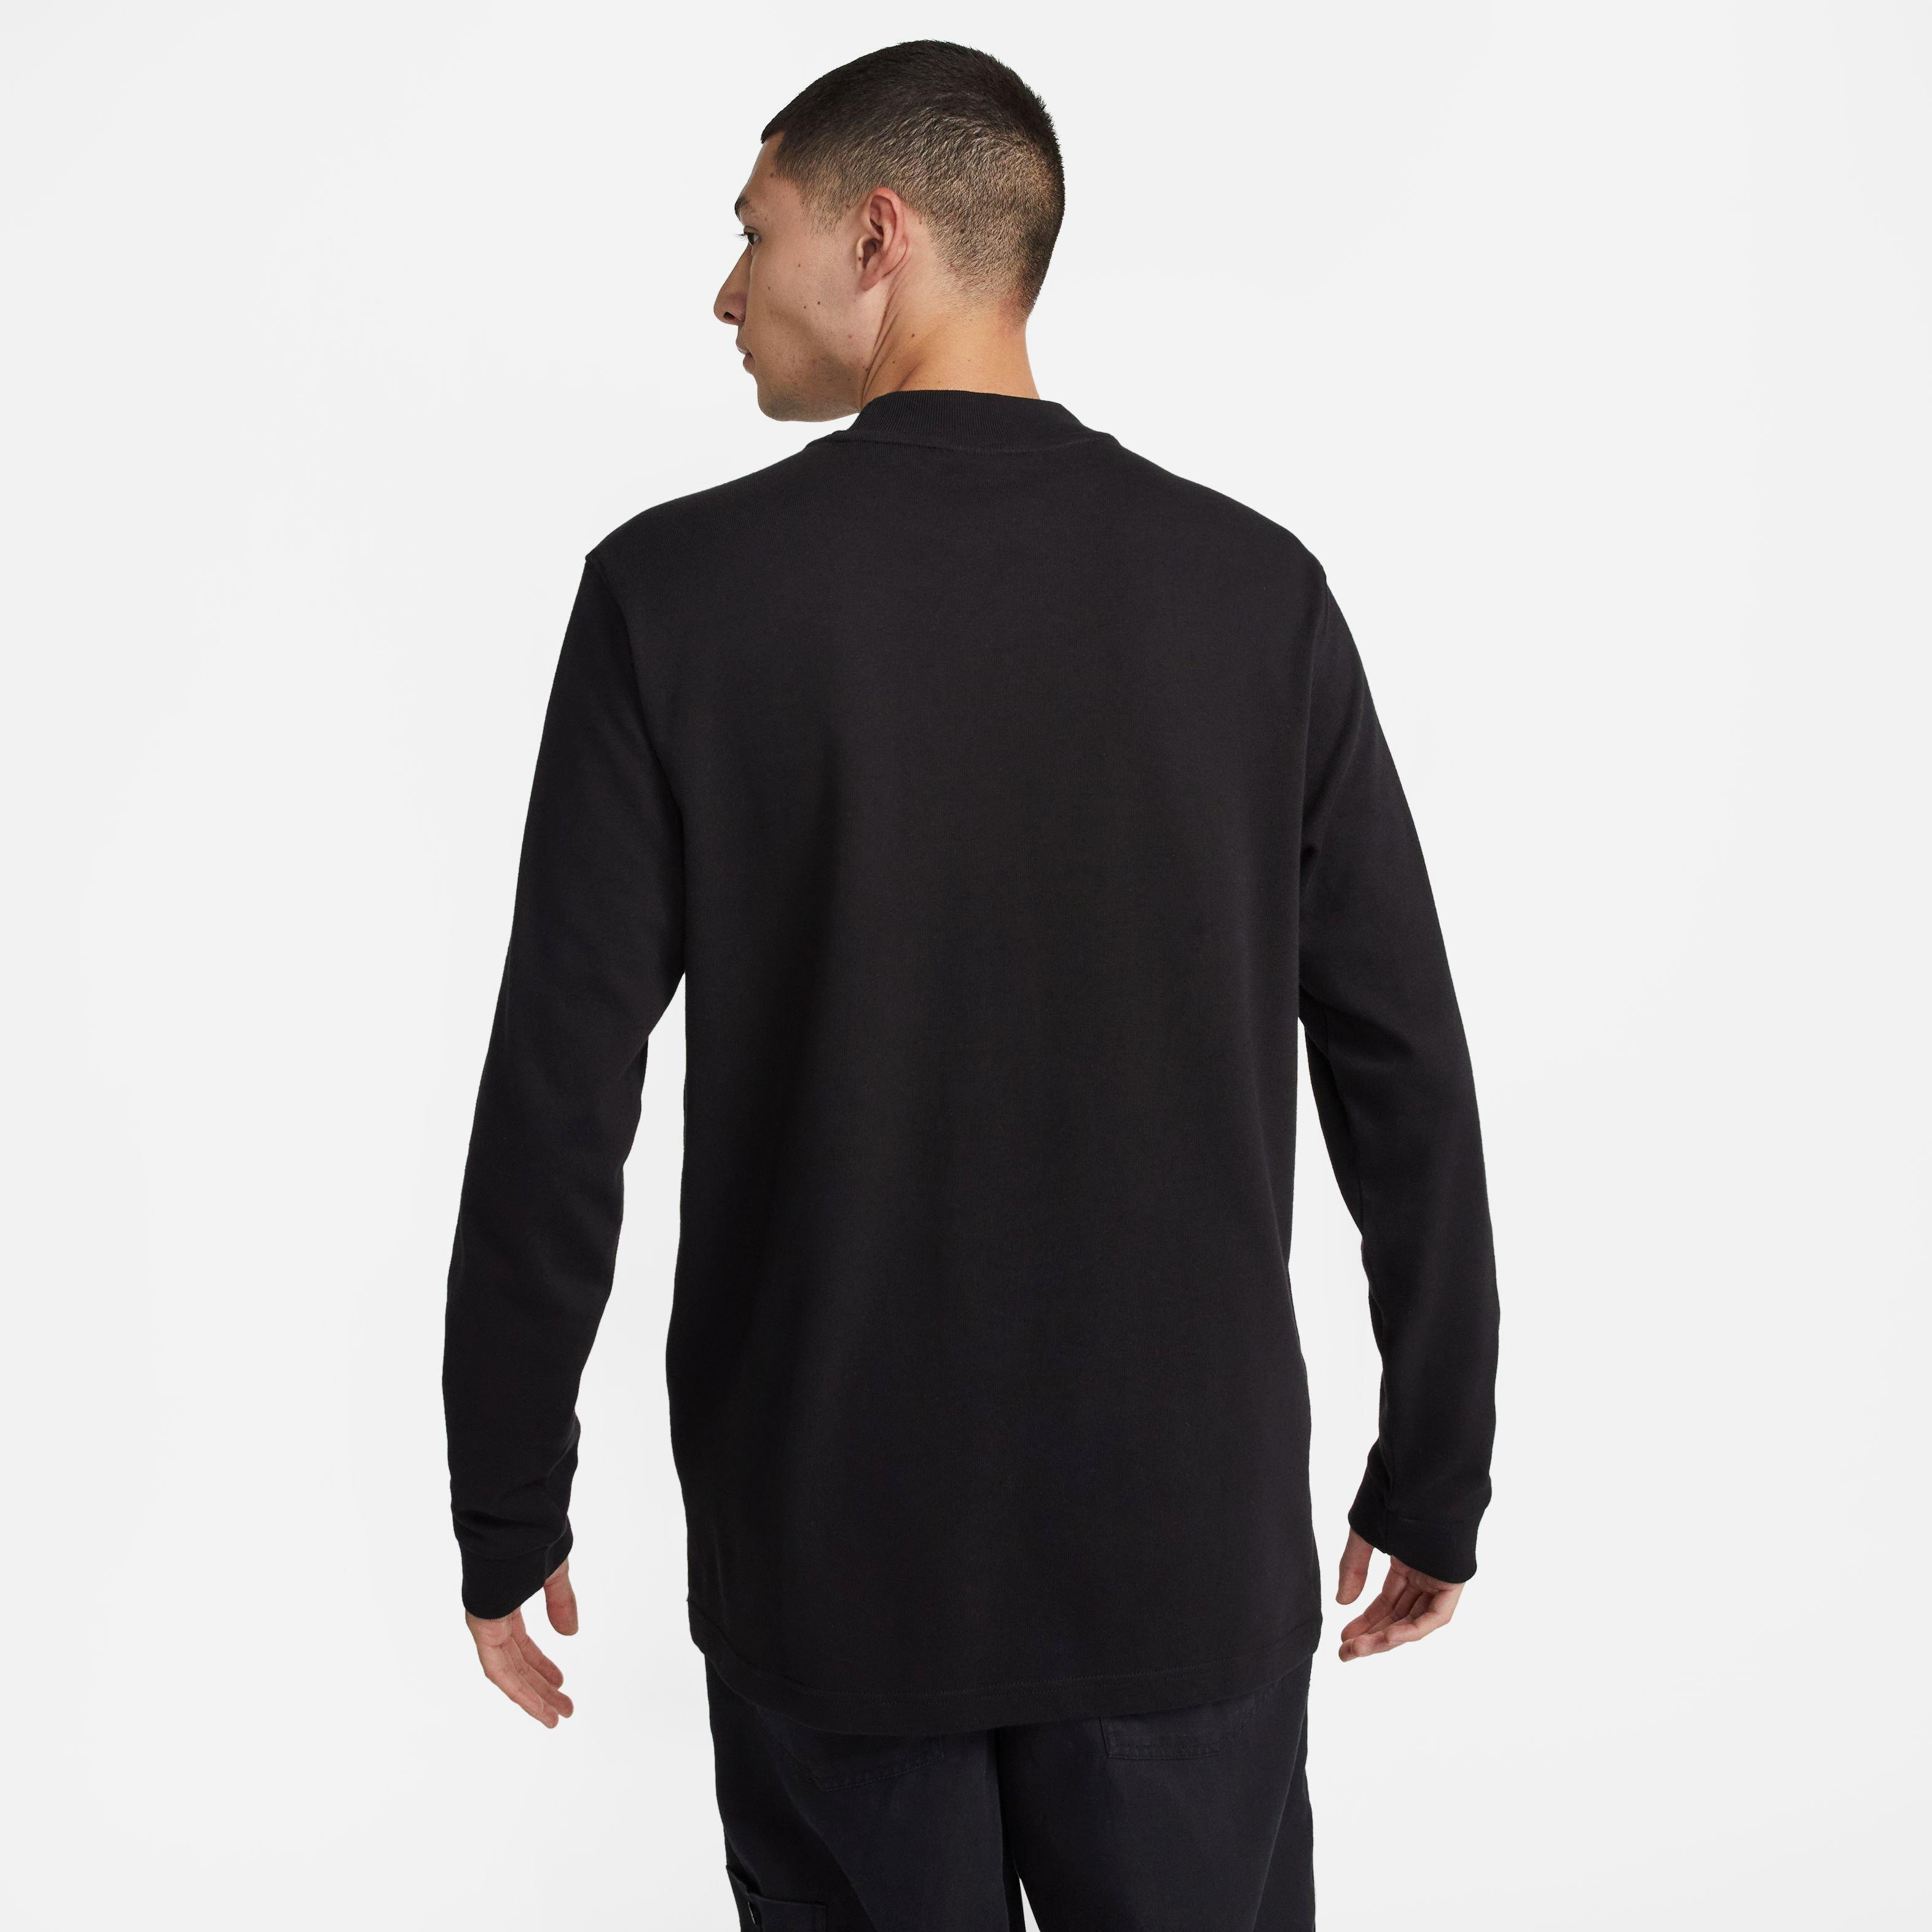 Nike Long-Sleeve Mock Neck Shirt Grey - PHANTOM/BLACK